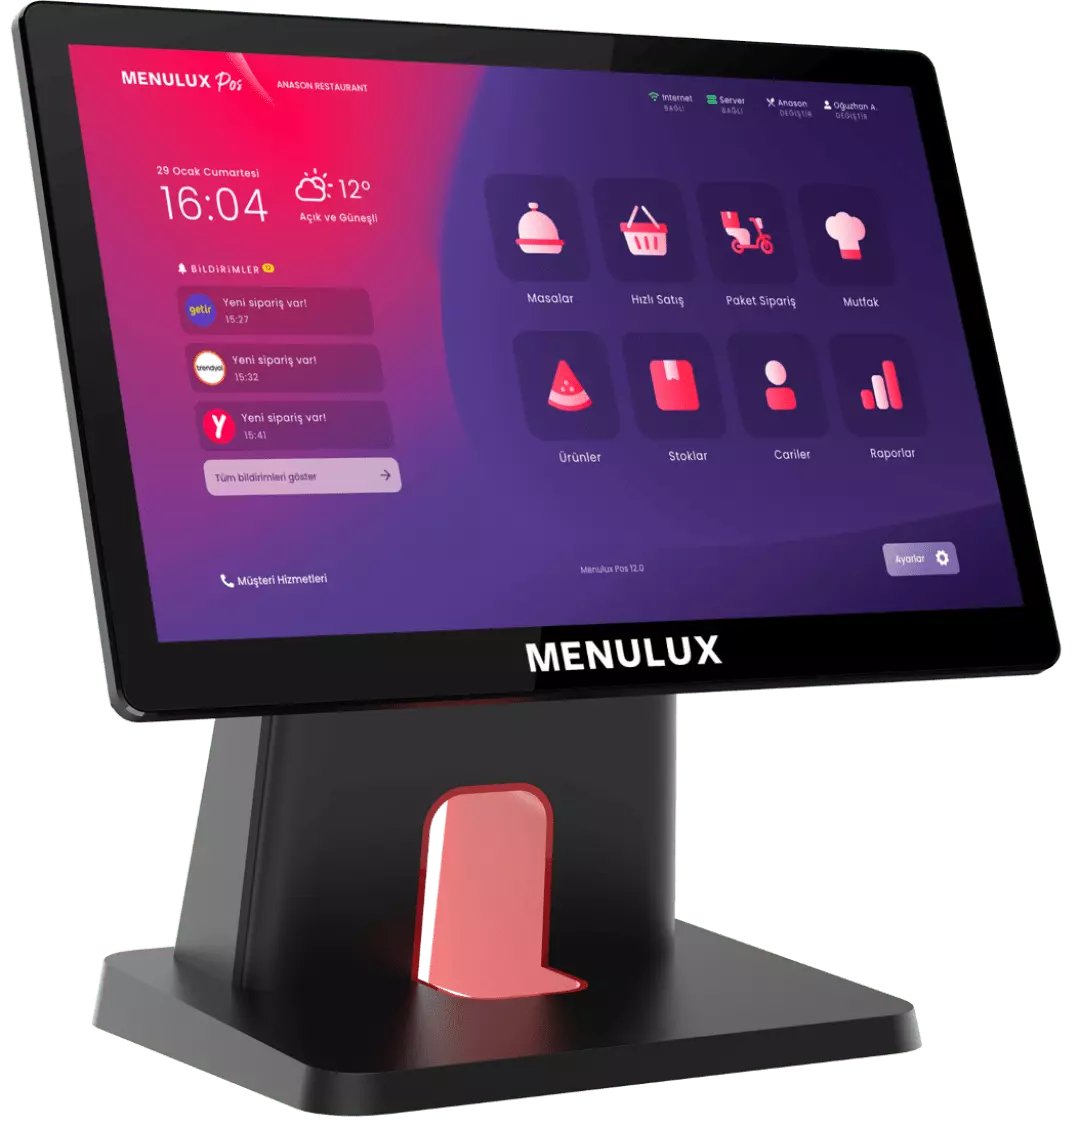 Menulux POS System - Dashboard screen